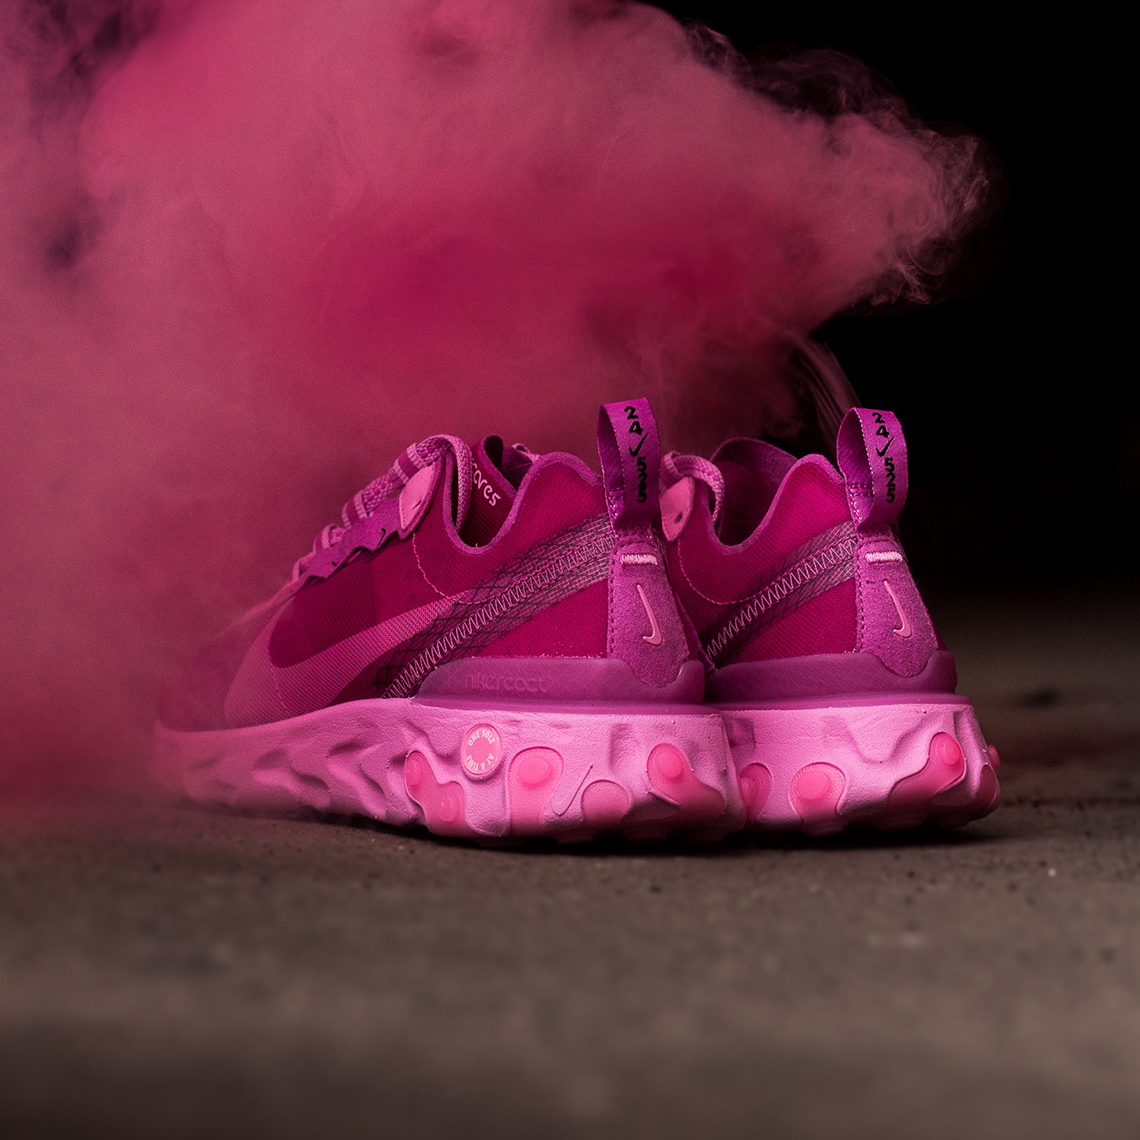 sneaker room nike react element 87 pink pink 3